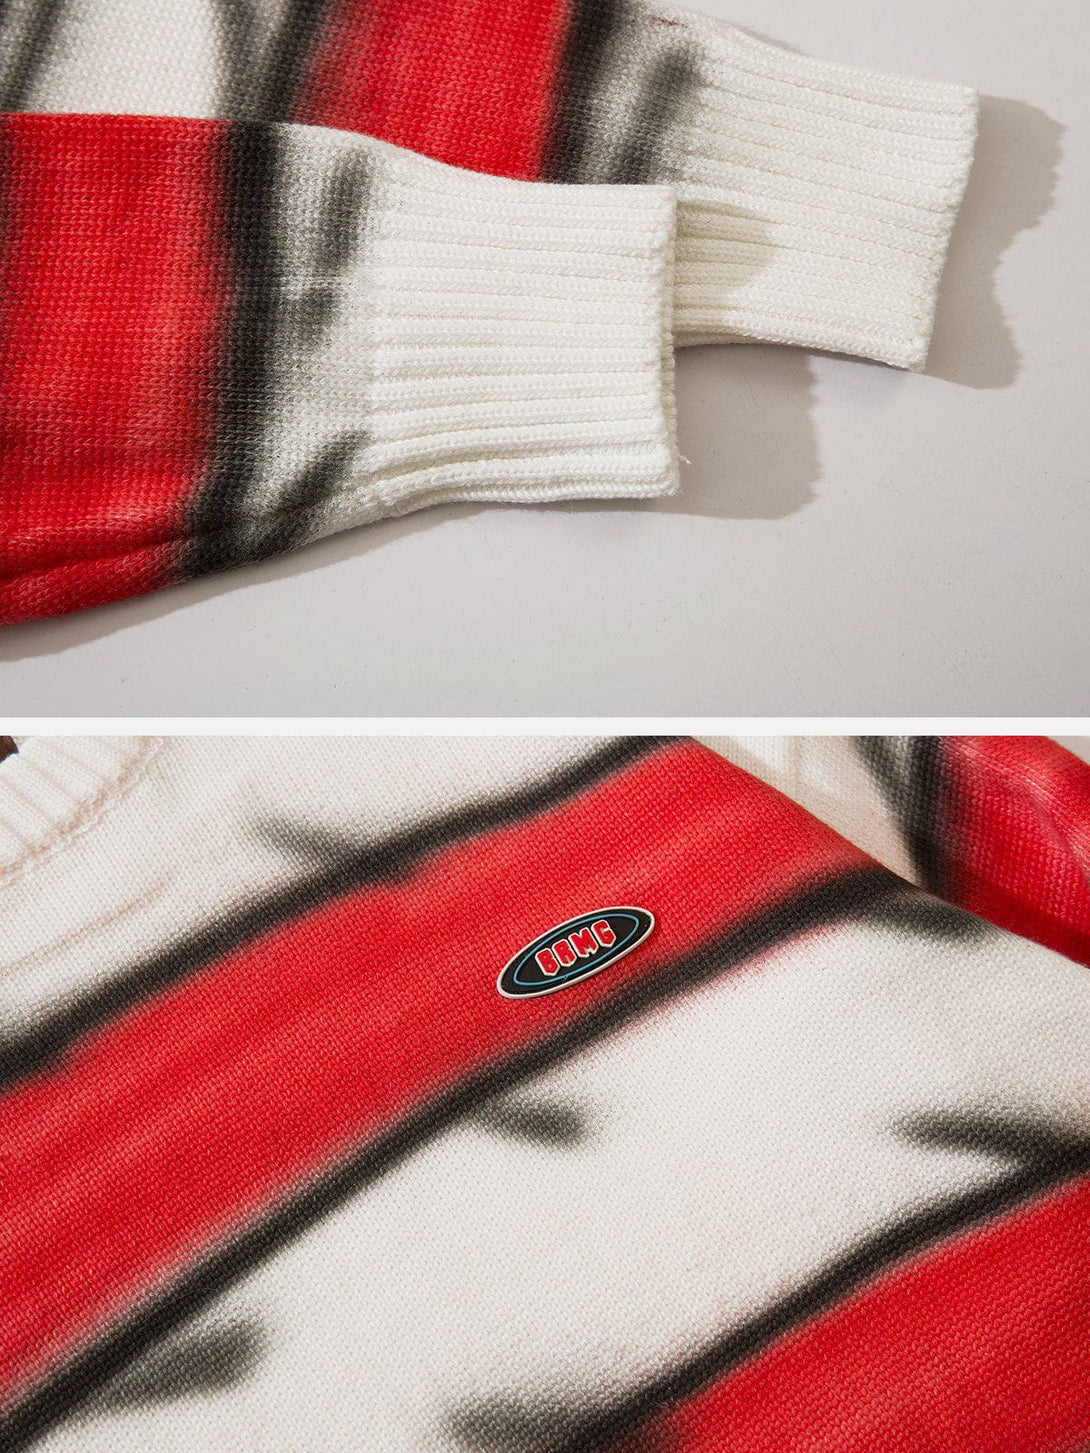 Majesda® - Contrast Stripe Sweater outfit ideas streetwear fashion